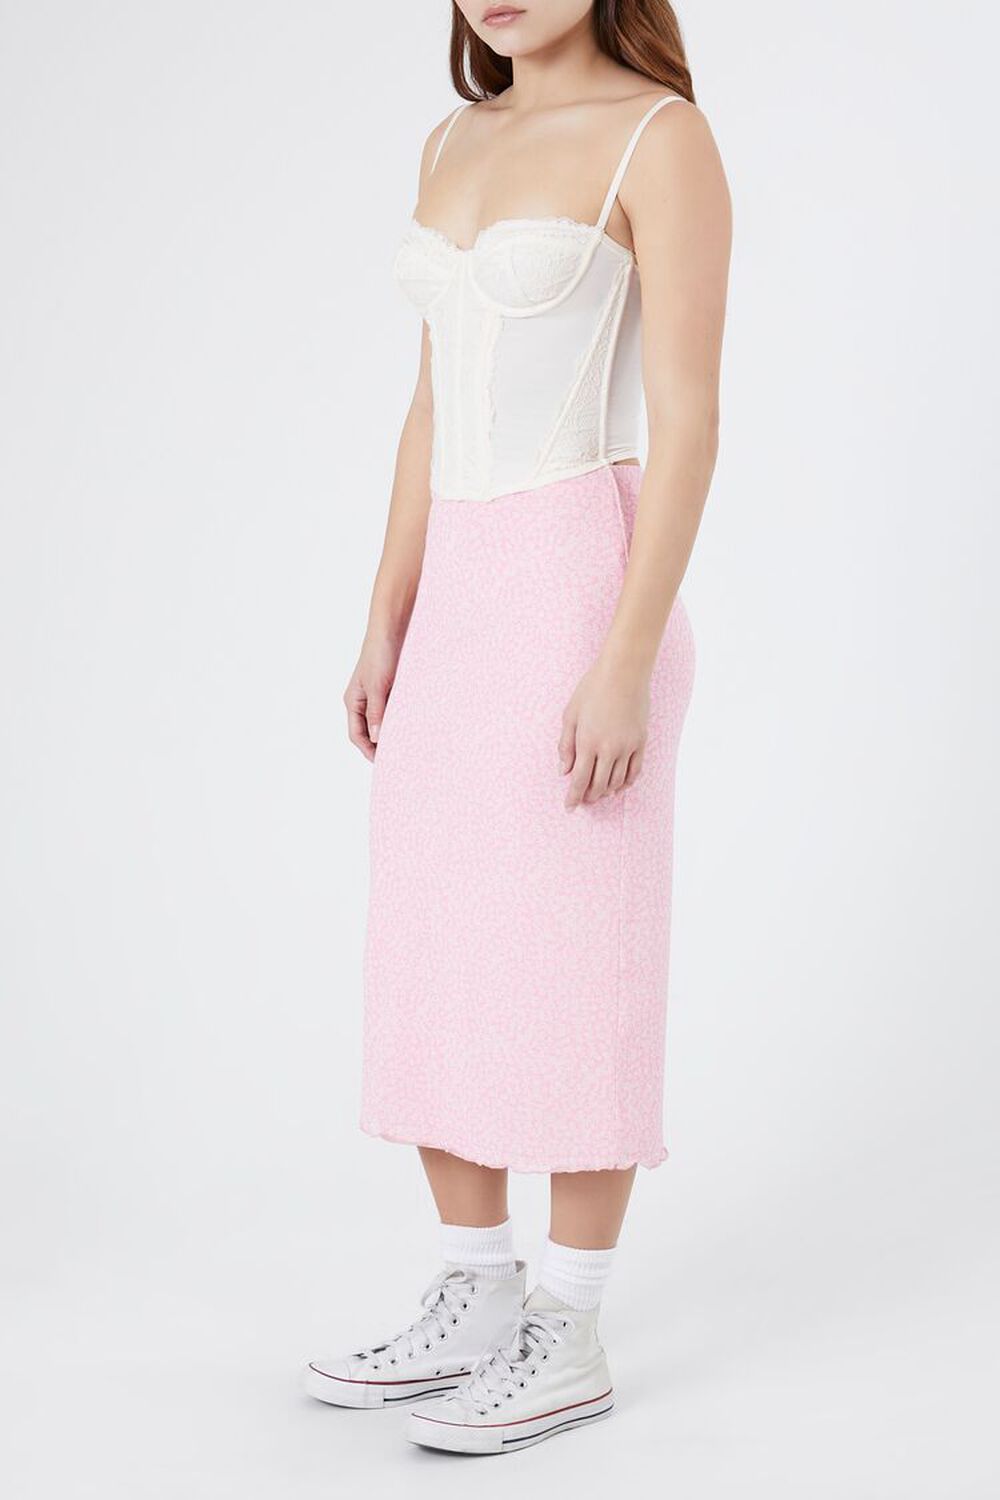 PINK/MULTI Ditsy Floral Print Midi Skirt, image 2